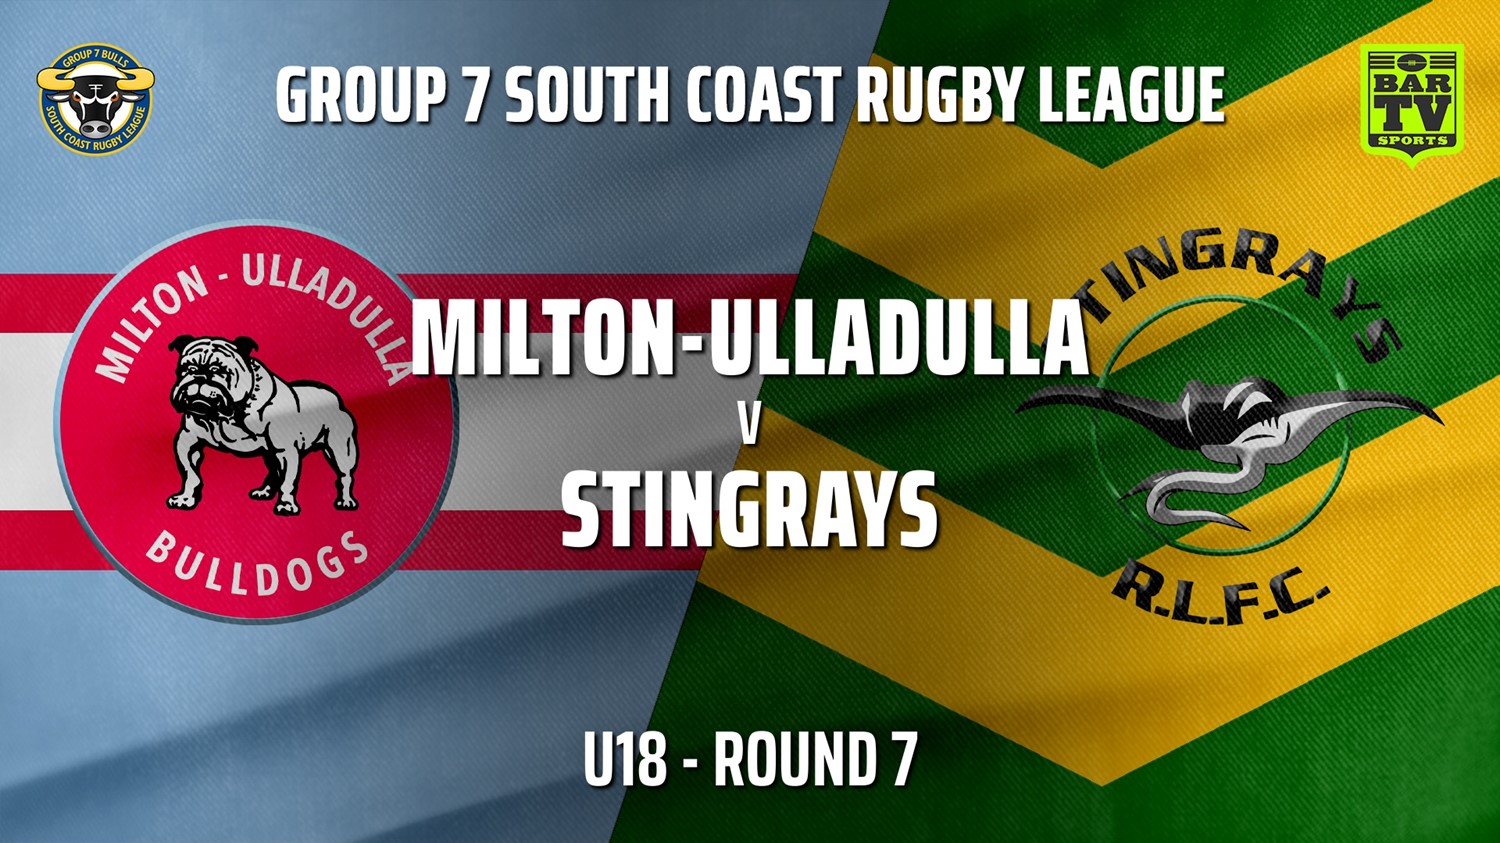 210530-Group 7 RL Round 7 - U18 - Milton-Ulladulla Bulldogs v Stingrays of Shellharbour Slate Image